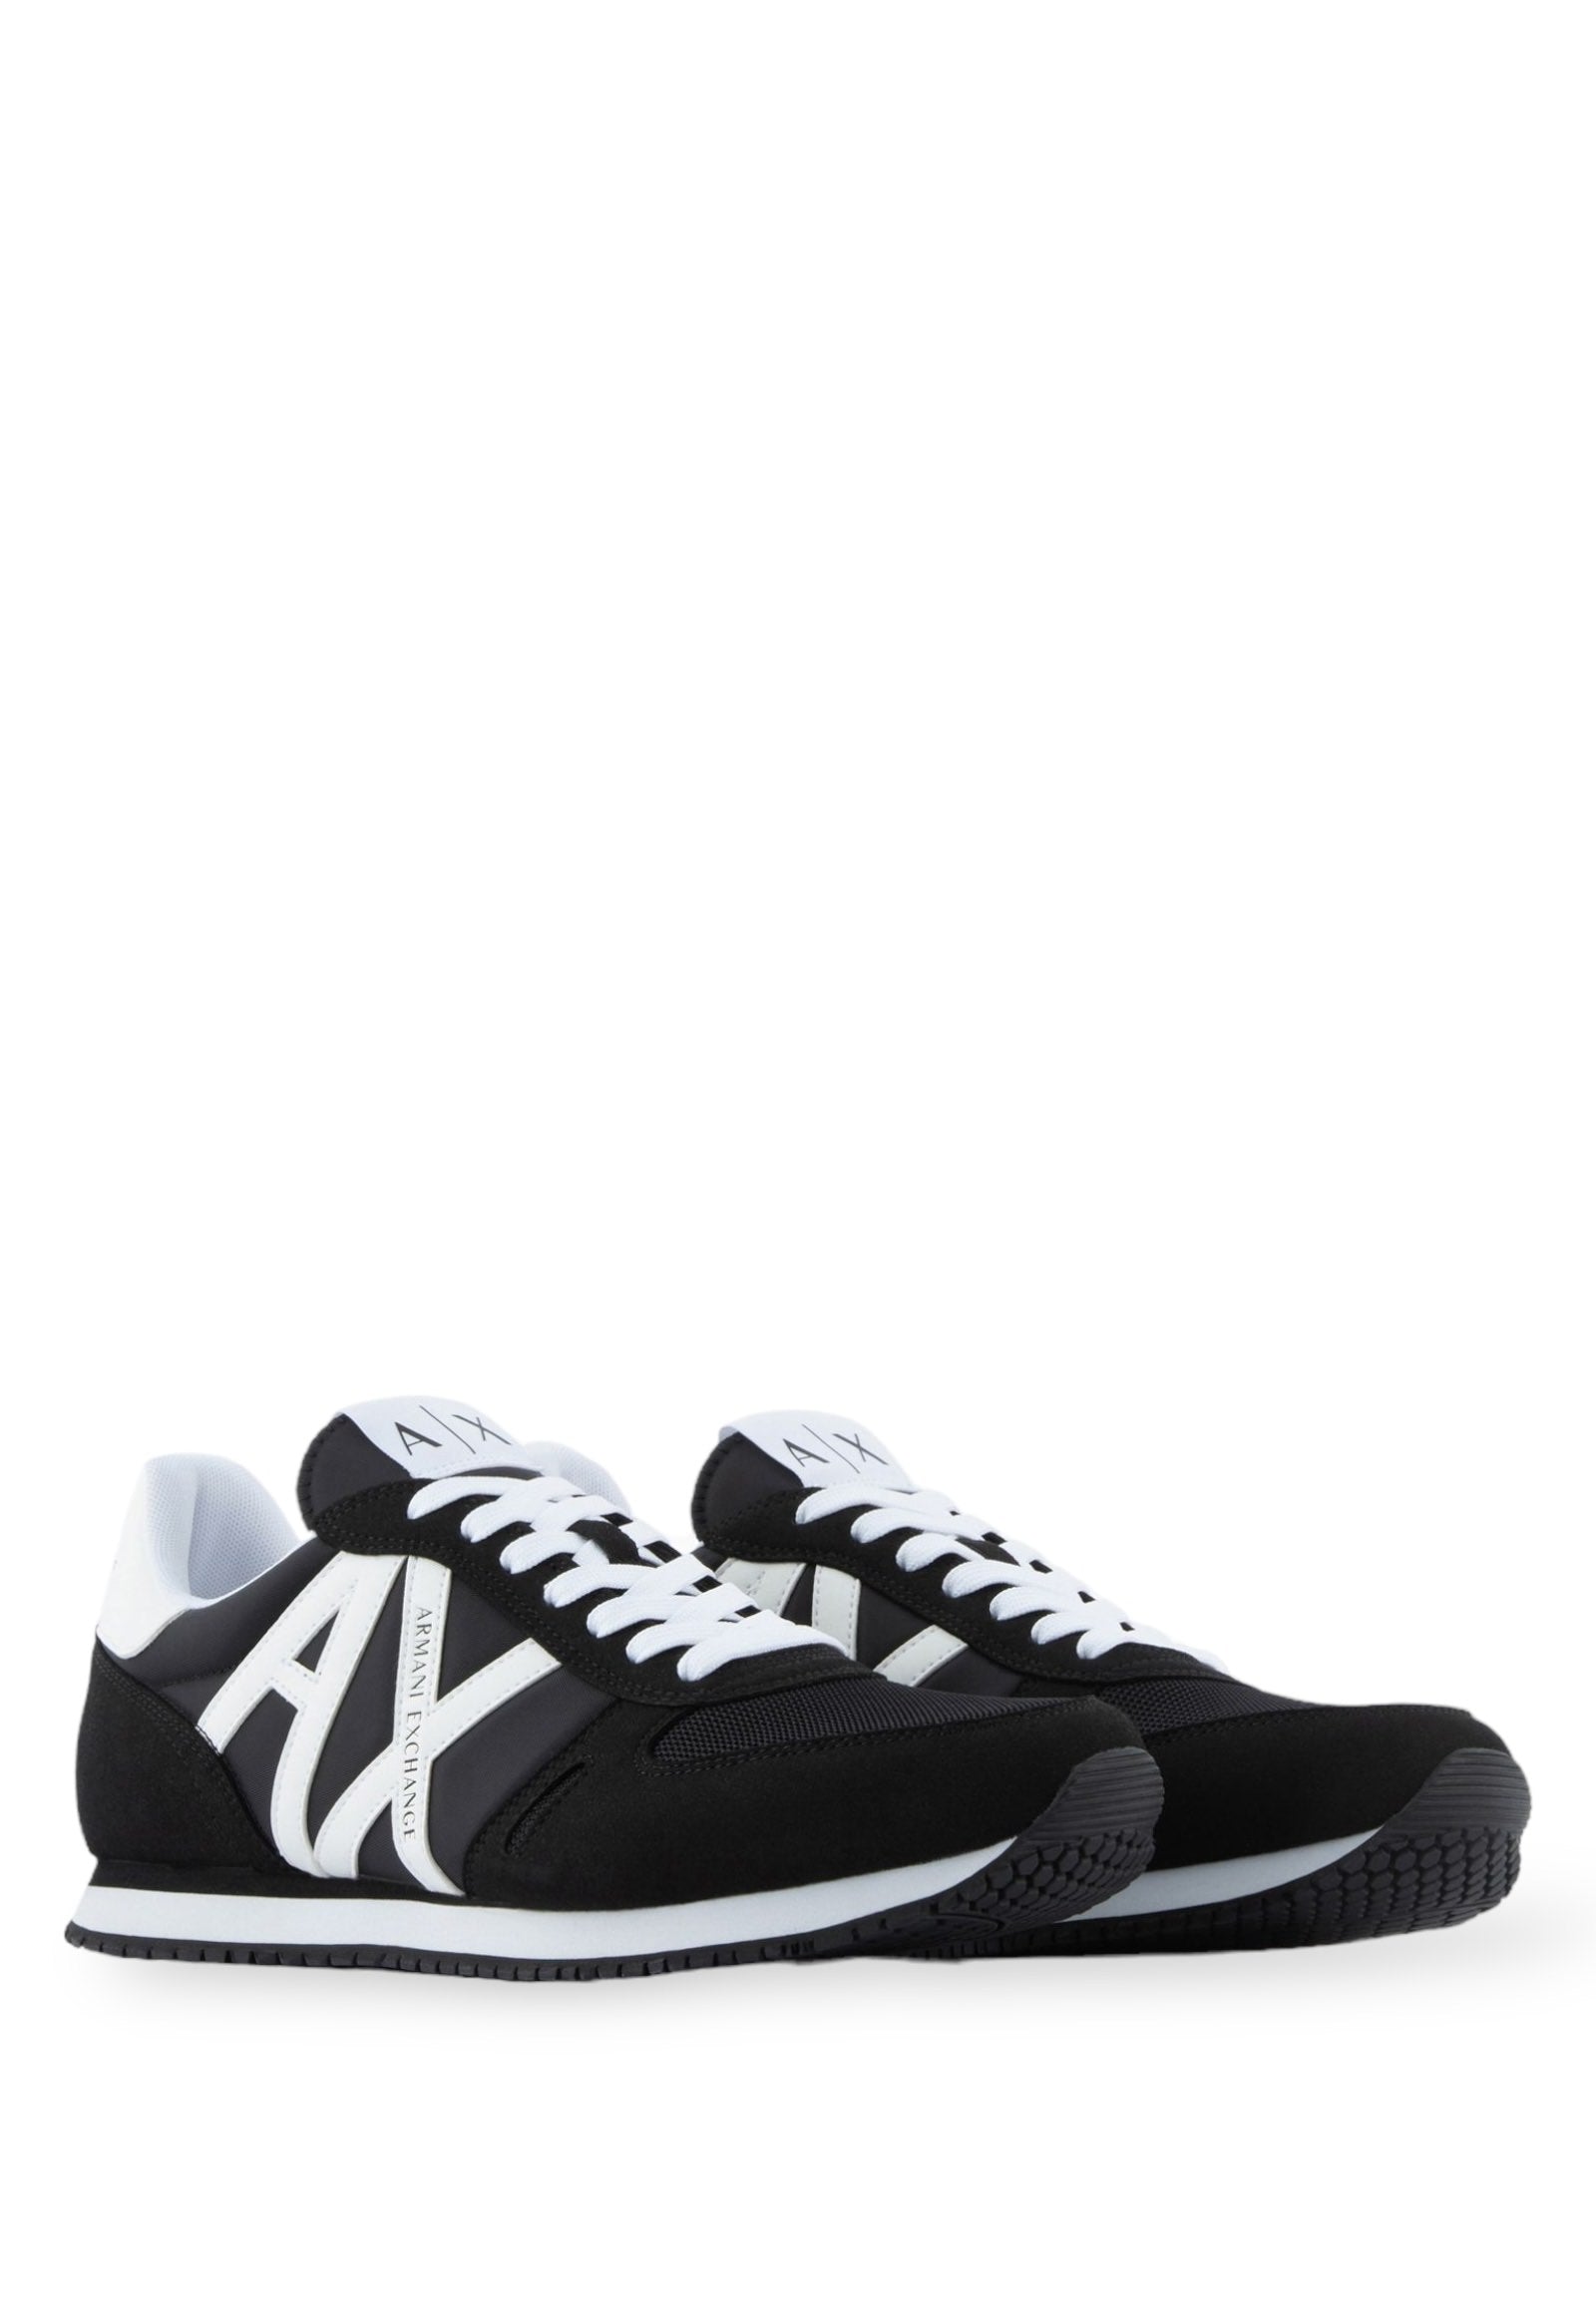 Sneakers Xux017 Black, White